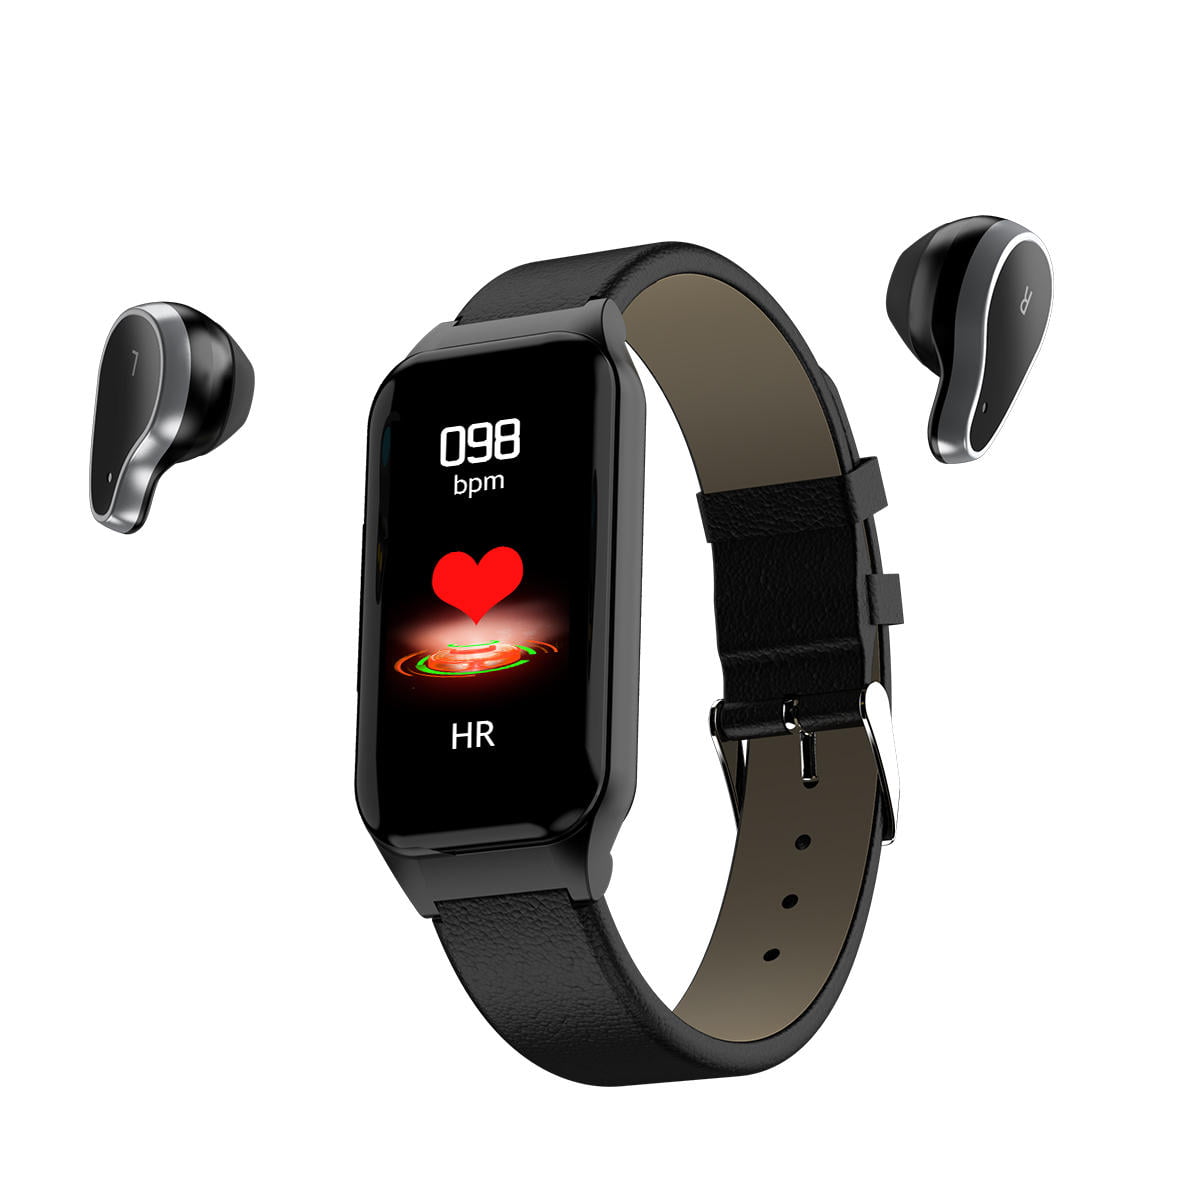 Bakeey smartwatch L818 smart watch bt5.0 intelligent noise reduction wireless earphone wristband (26)